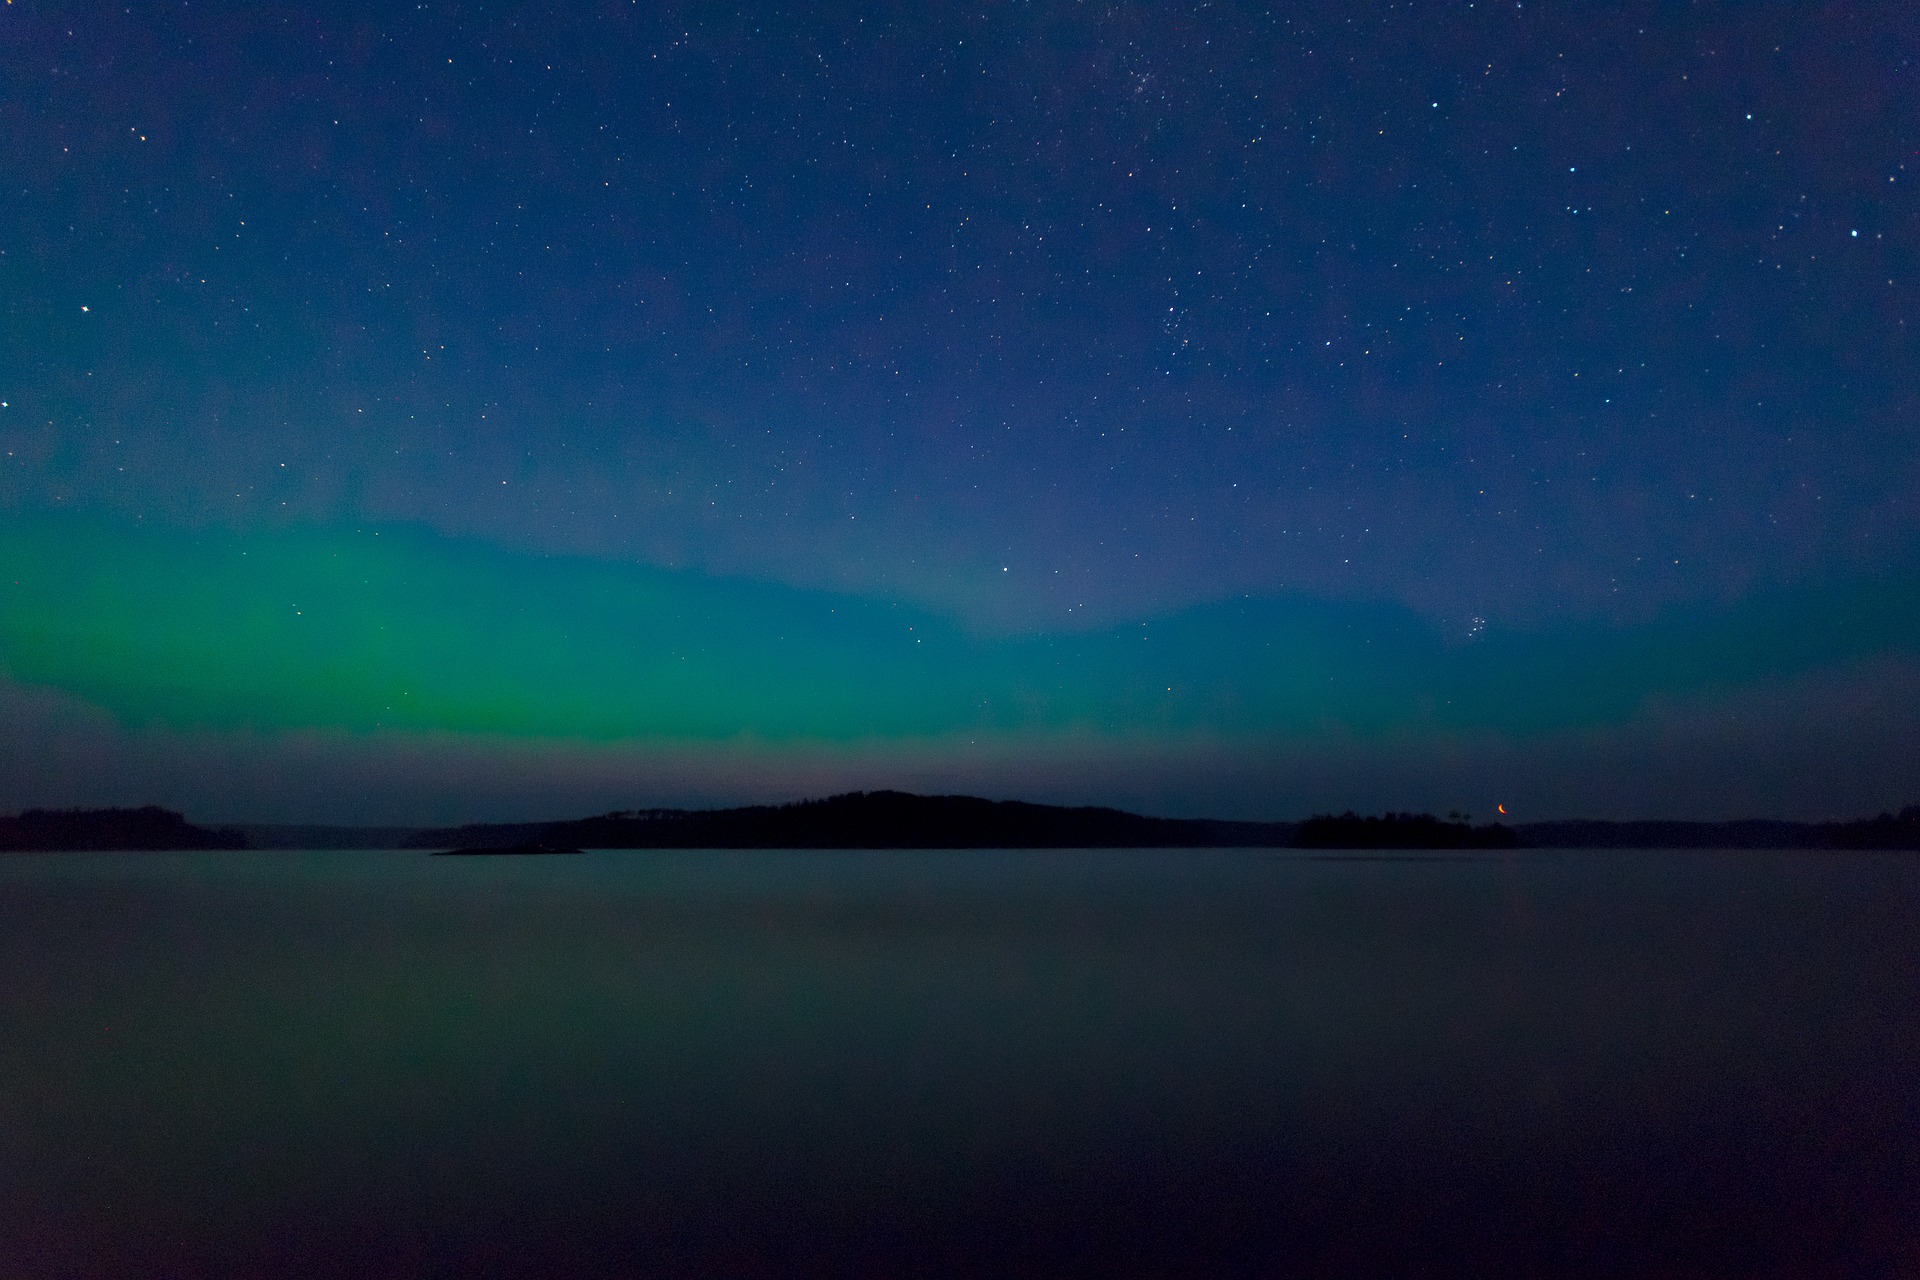 Aurora borealis appear in night's sky